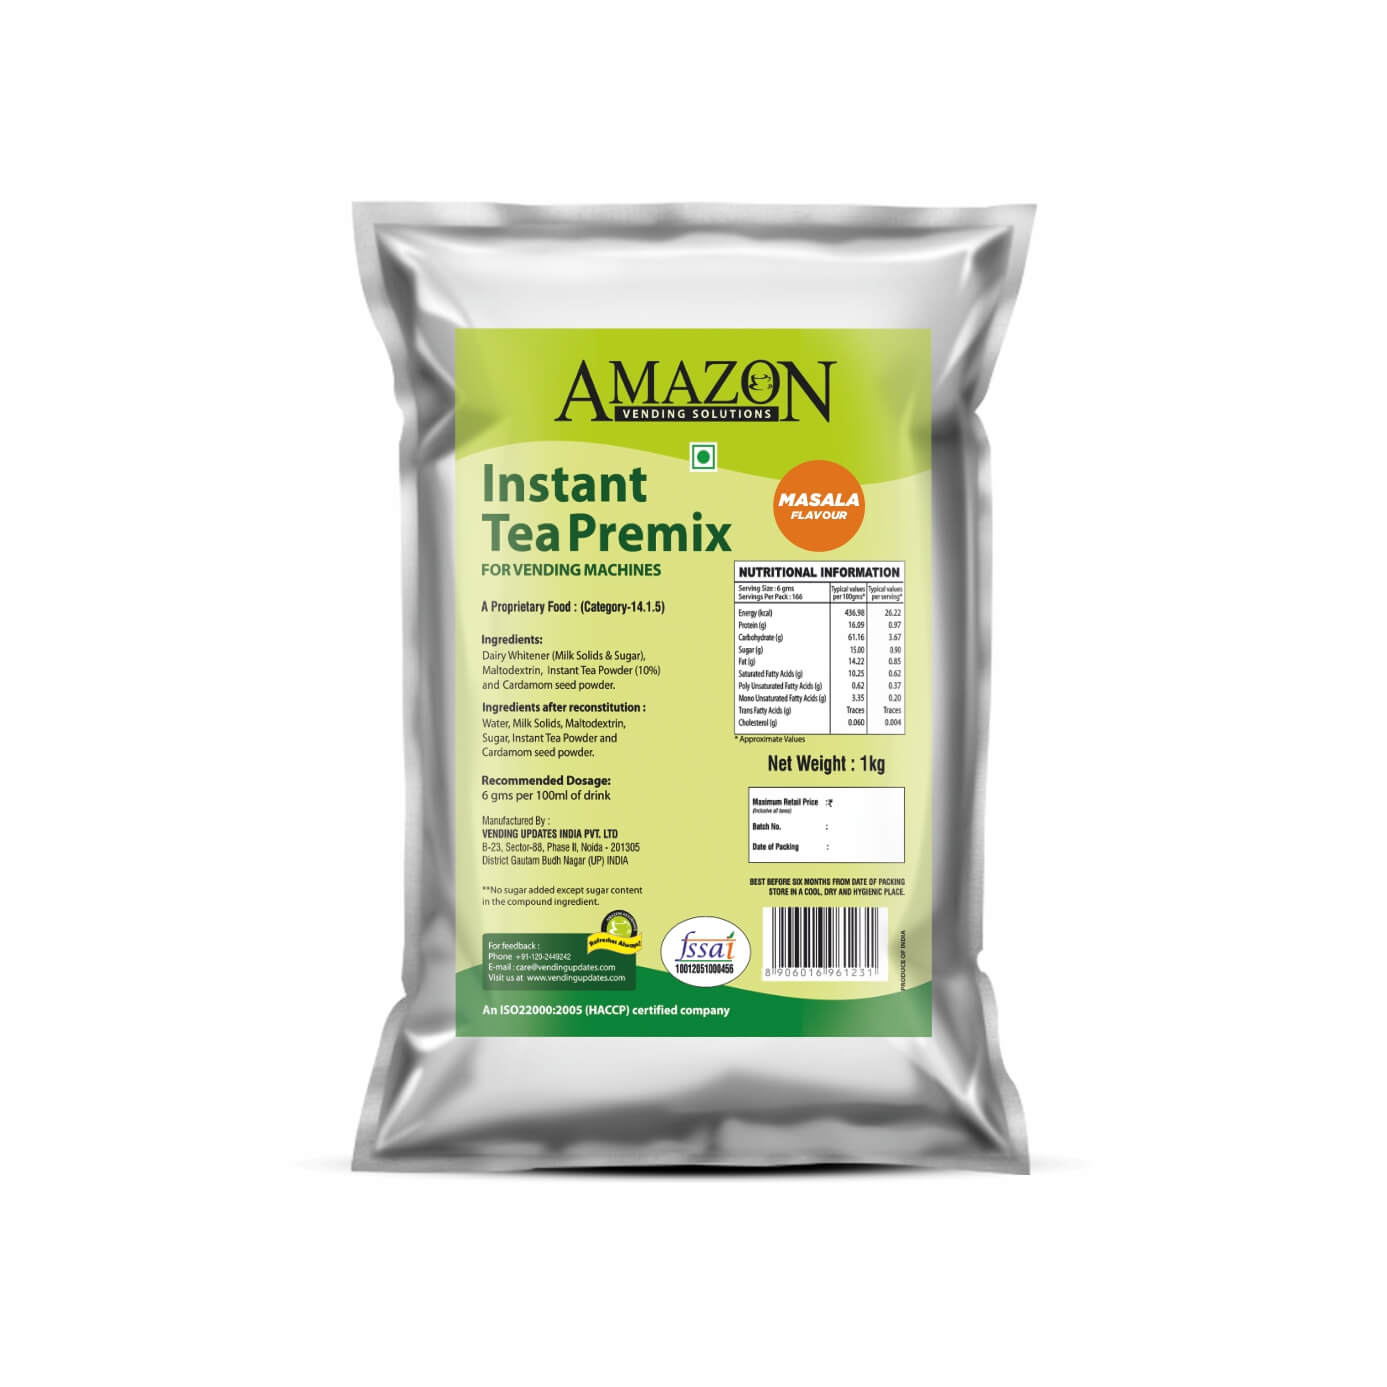 Amazon 3 in 1 Instant Masala Tea Premix Powder 1 Kg for Vending Machines